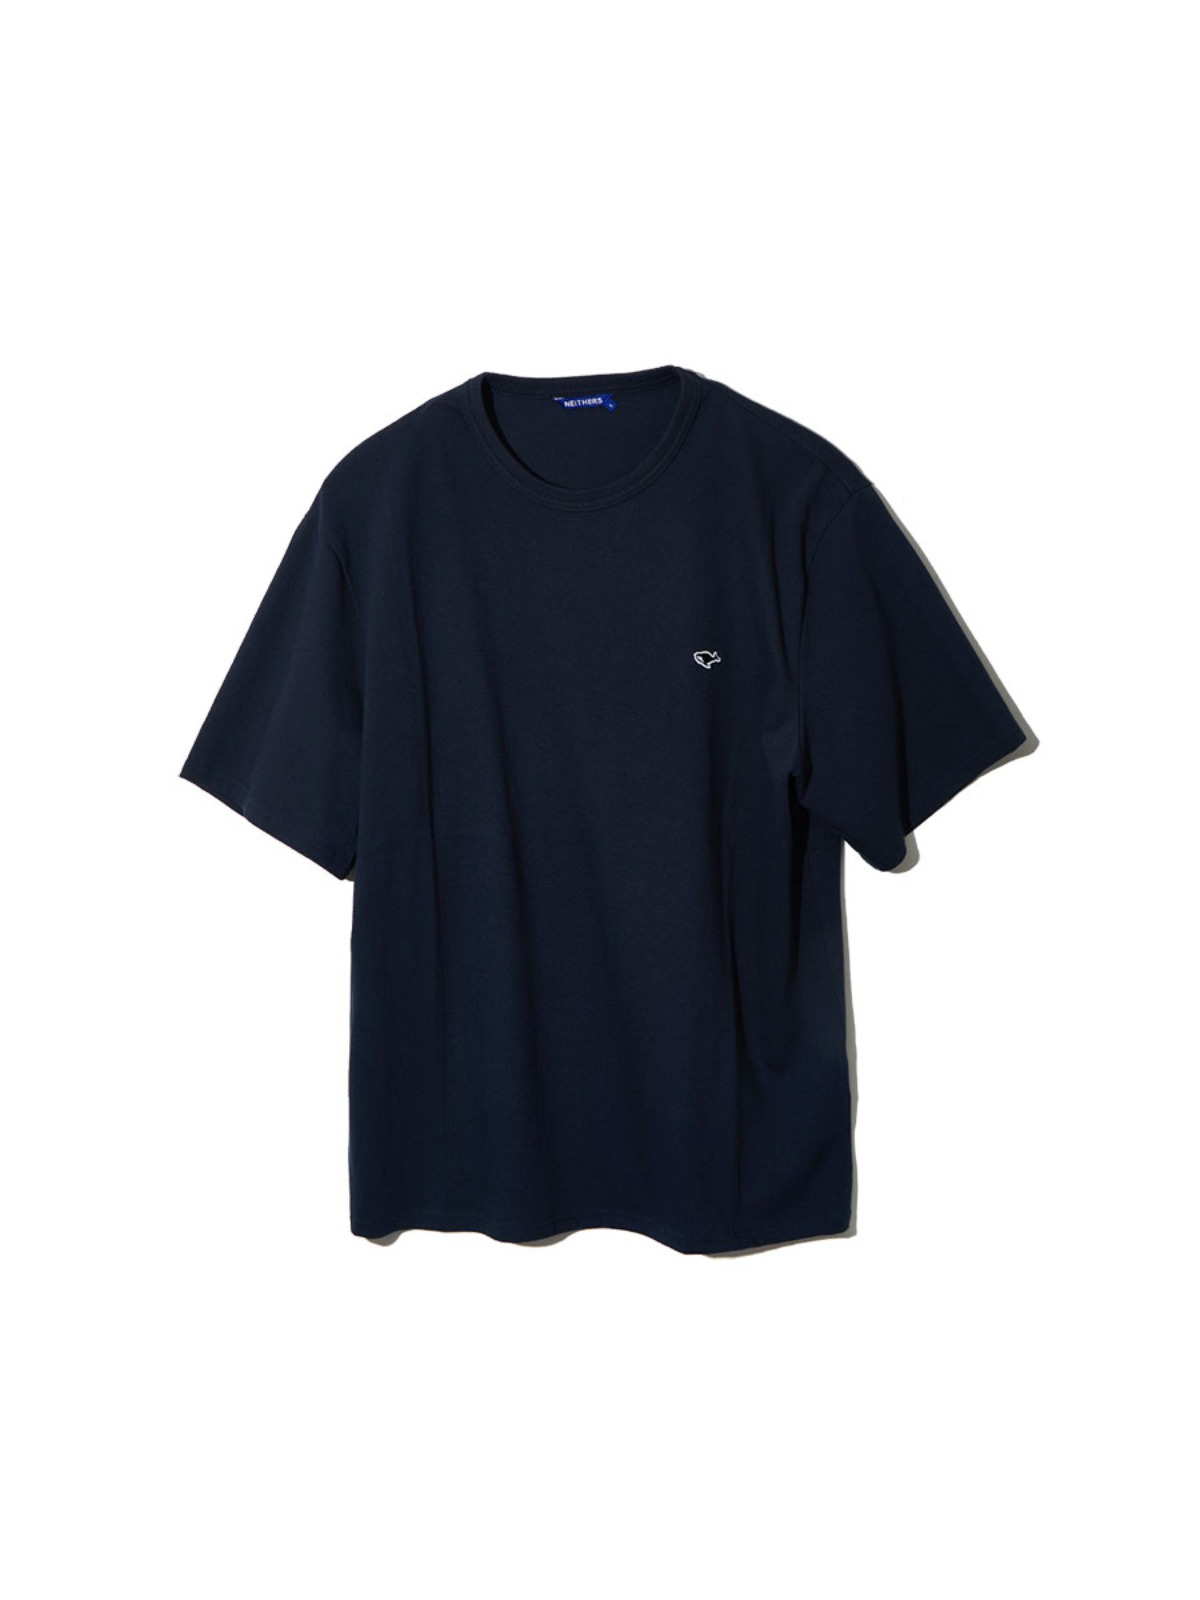 Basic S/S T-Shirt (Navy)